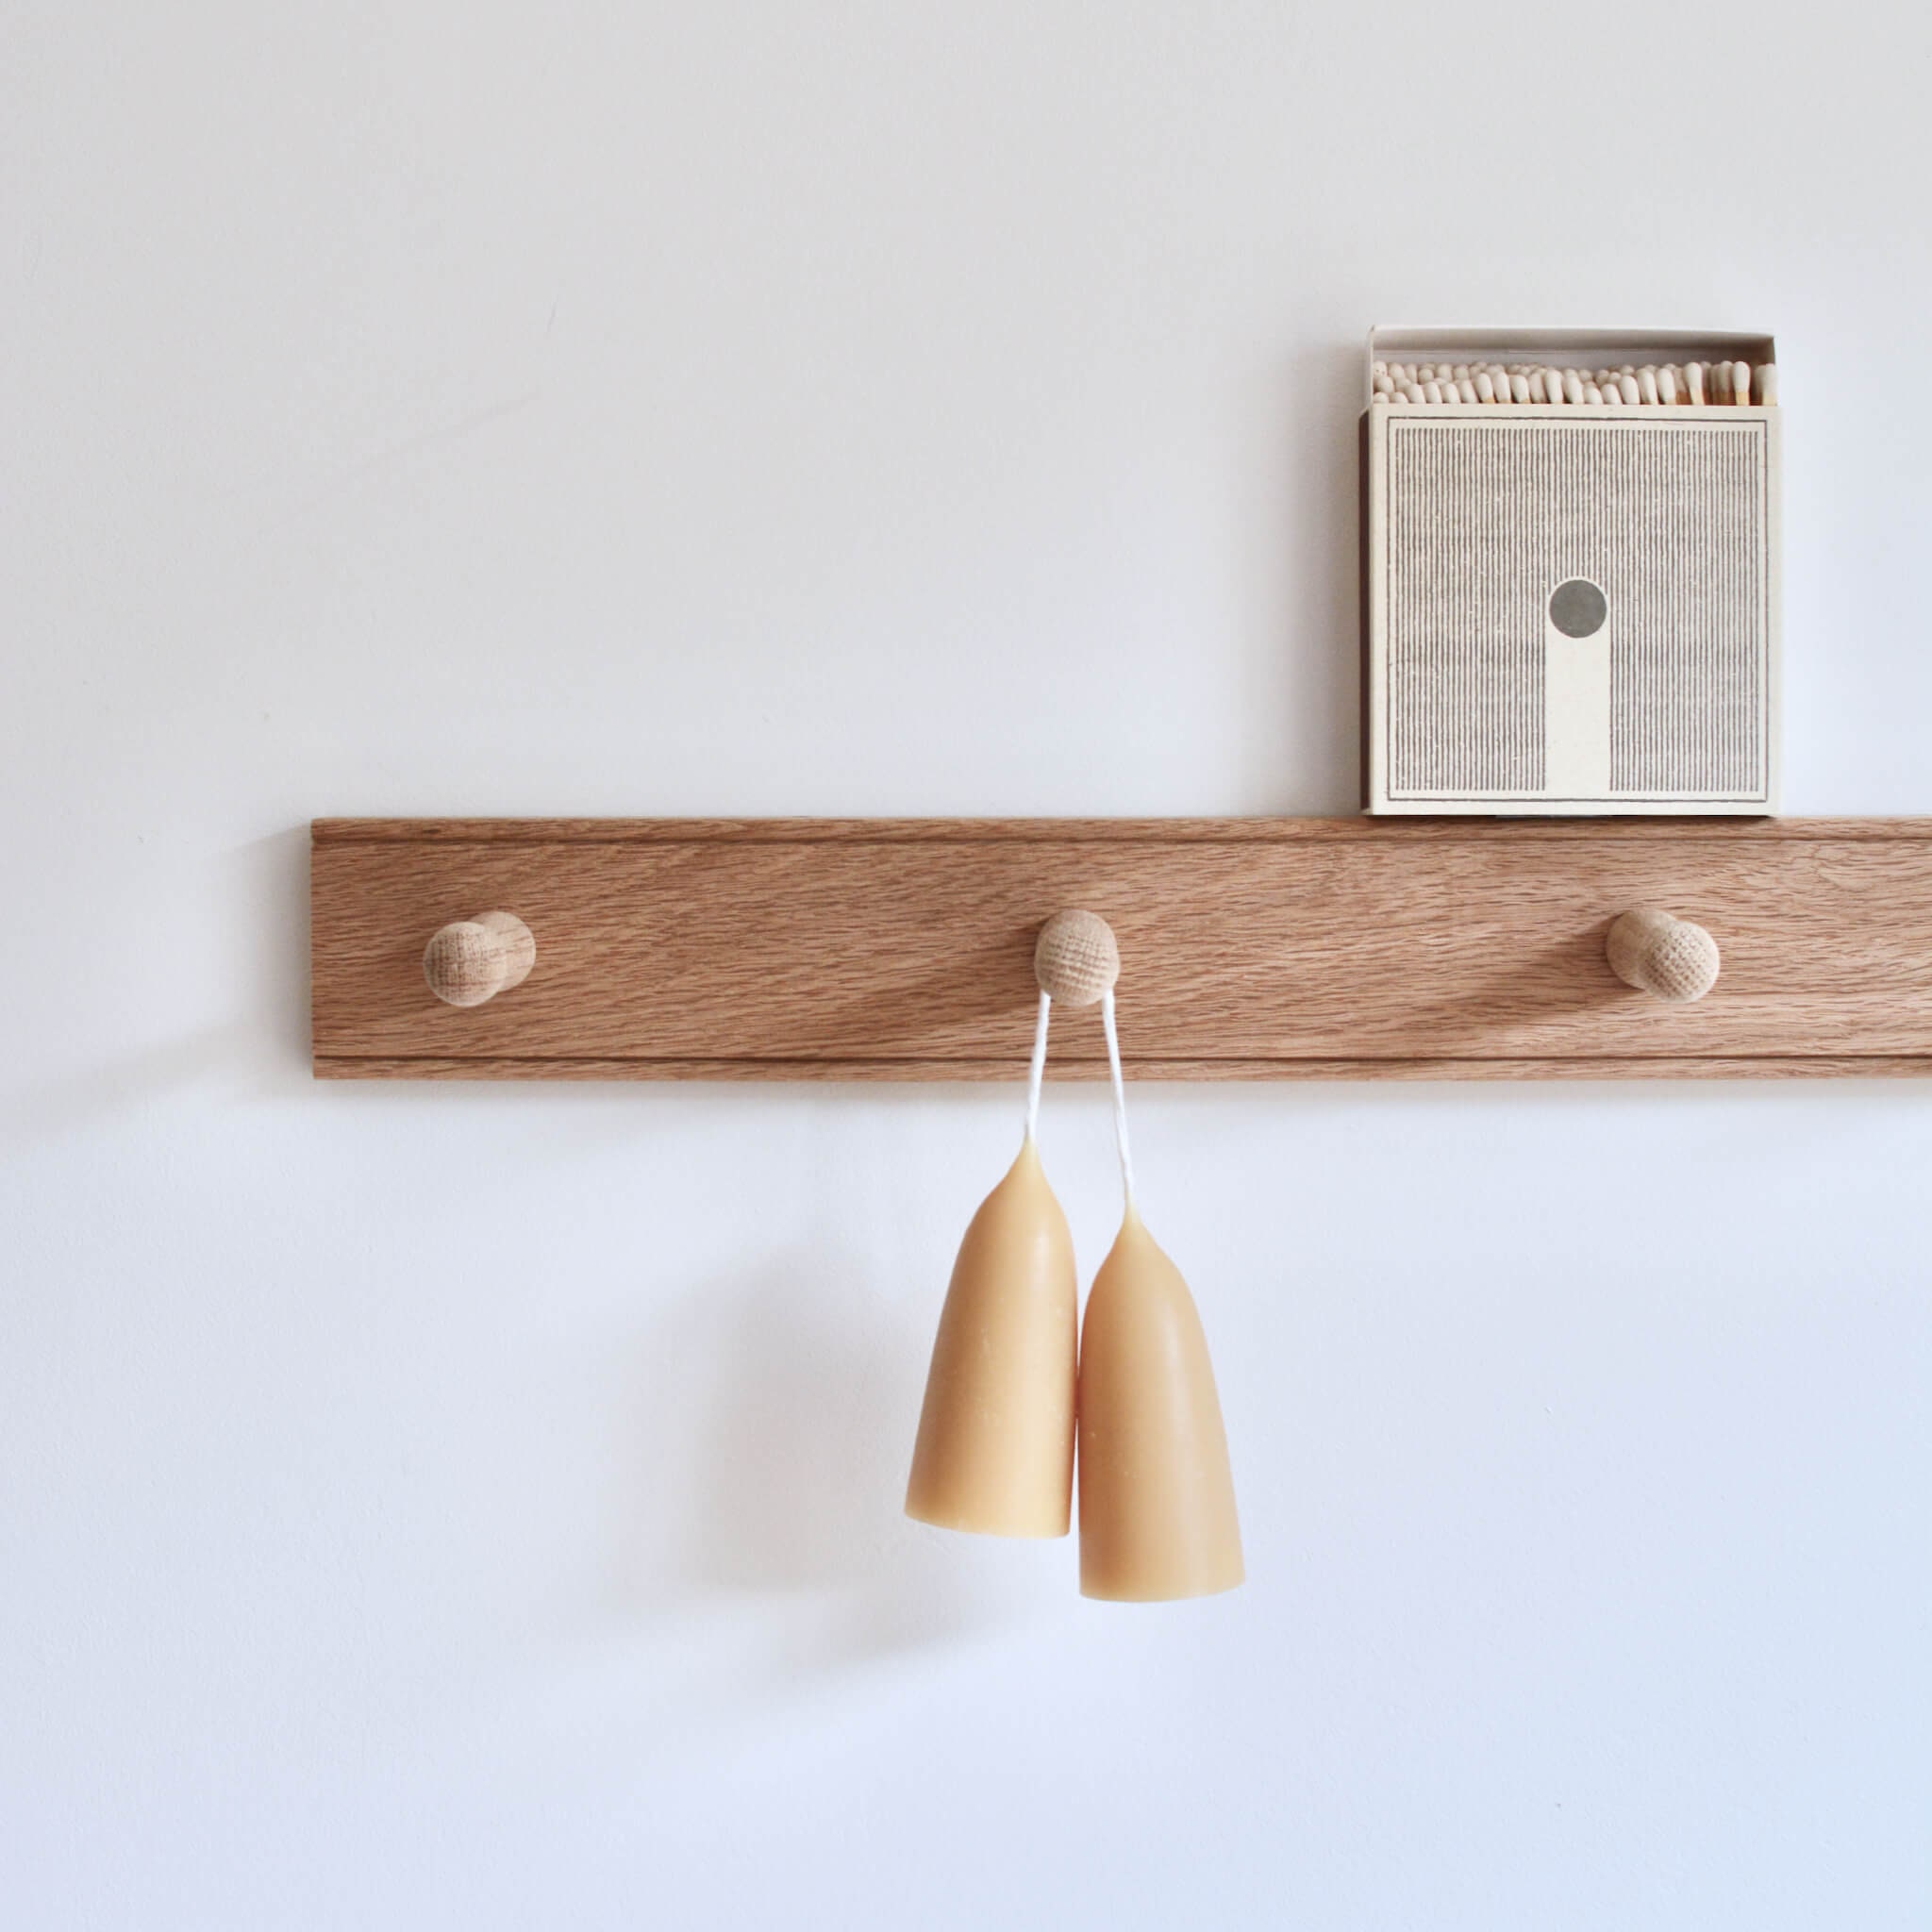  42 Unfinished Shaker Peg Rack With Shelf : Handmade Products